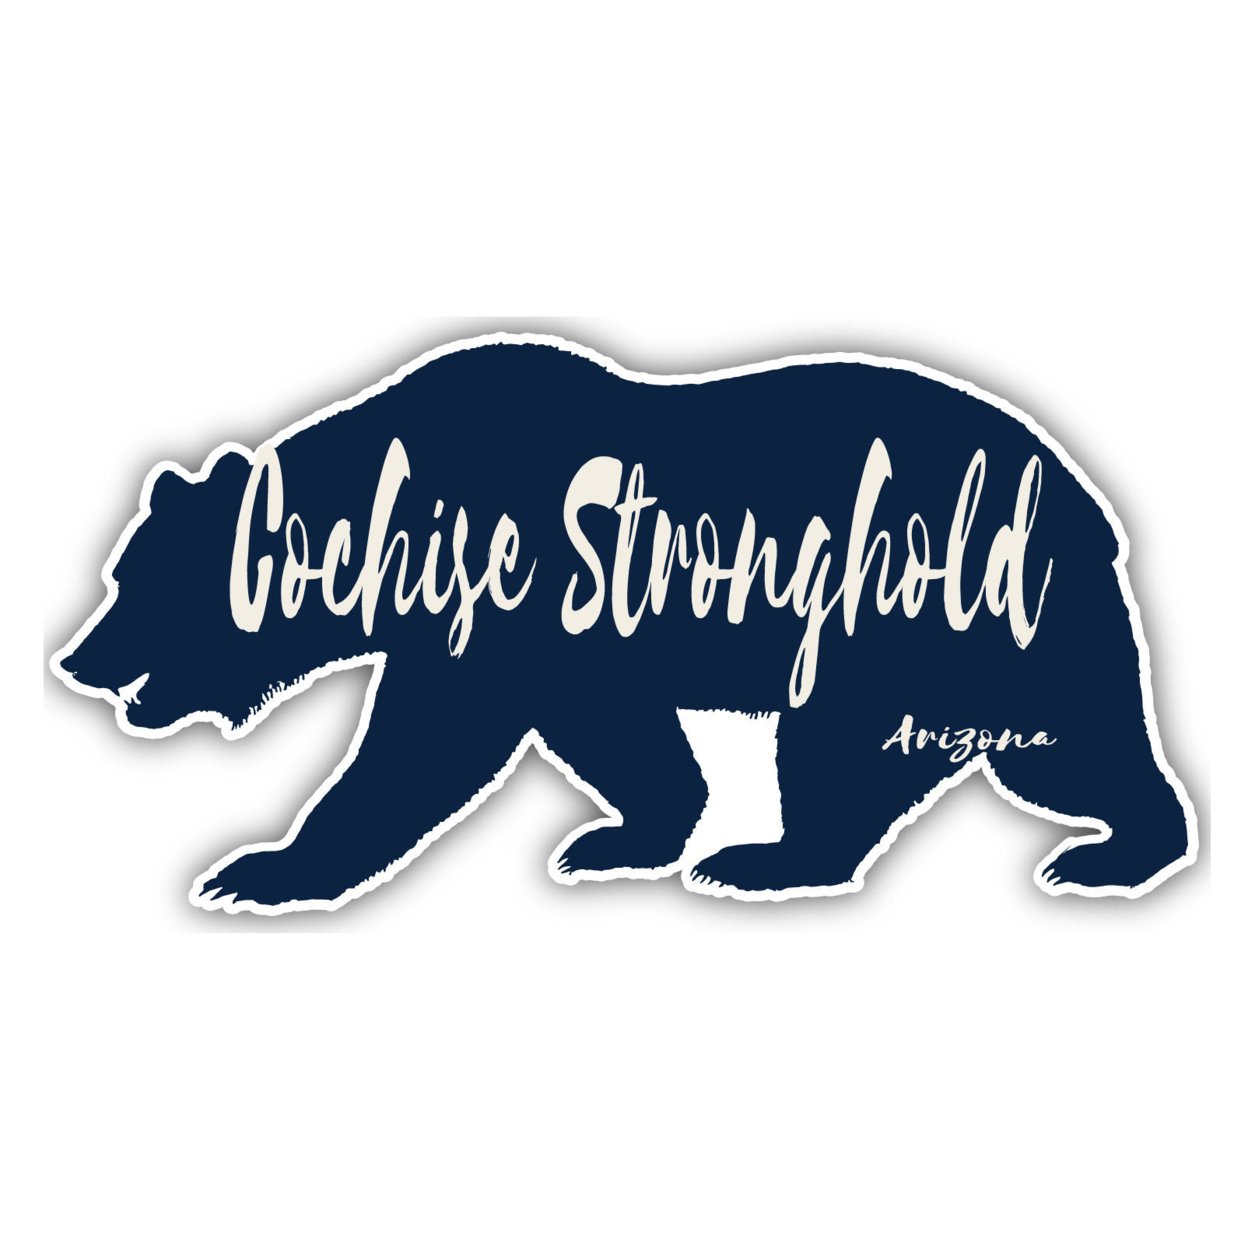 Cochise Stronghold Arizona Souvenir Decorative Stickers (Choose Theme And Size) - Single Unit, 8-Inch, Bear